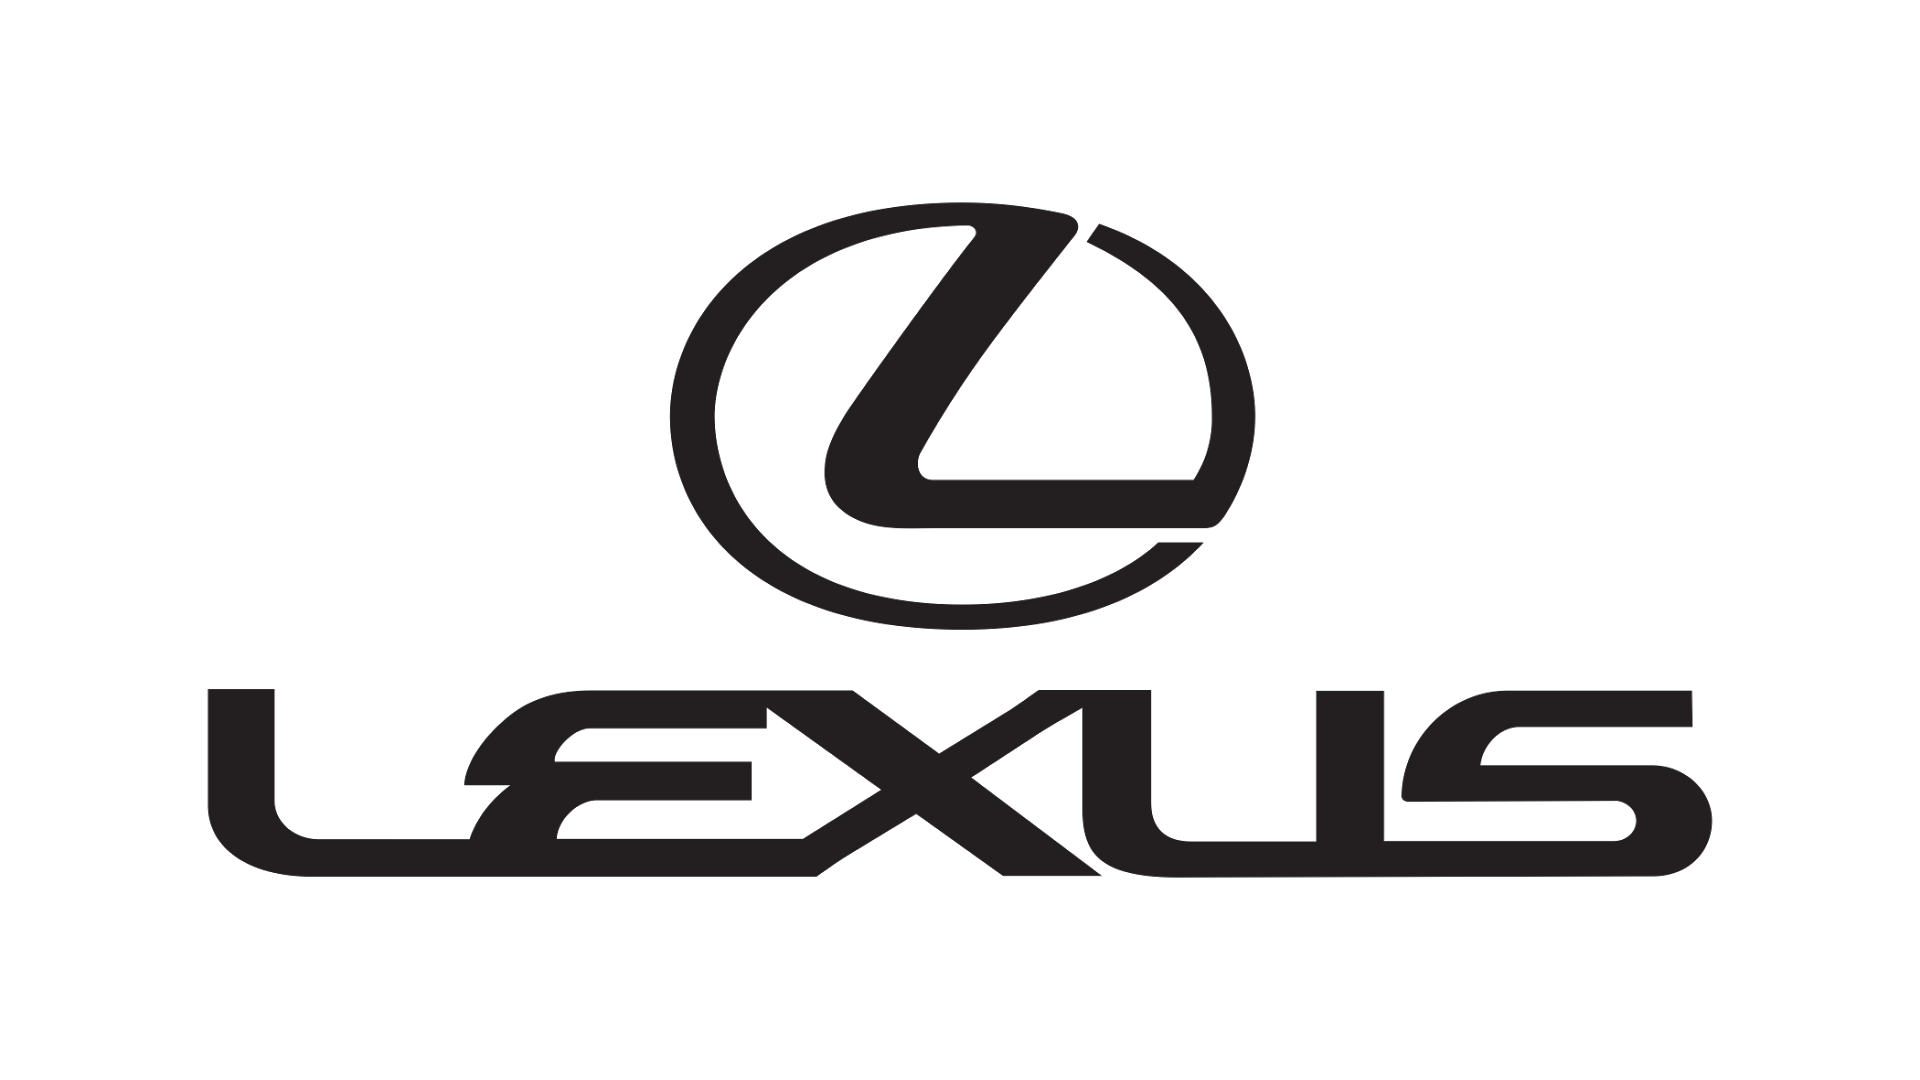 Lexus-symbol-1988-1920x1080.png